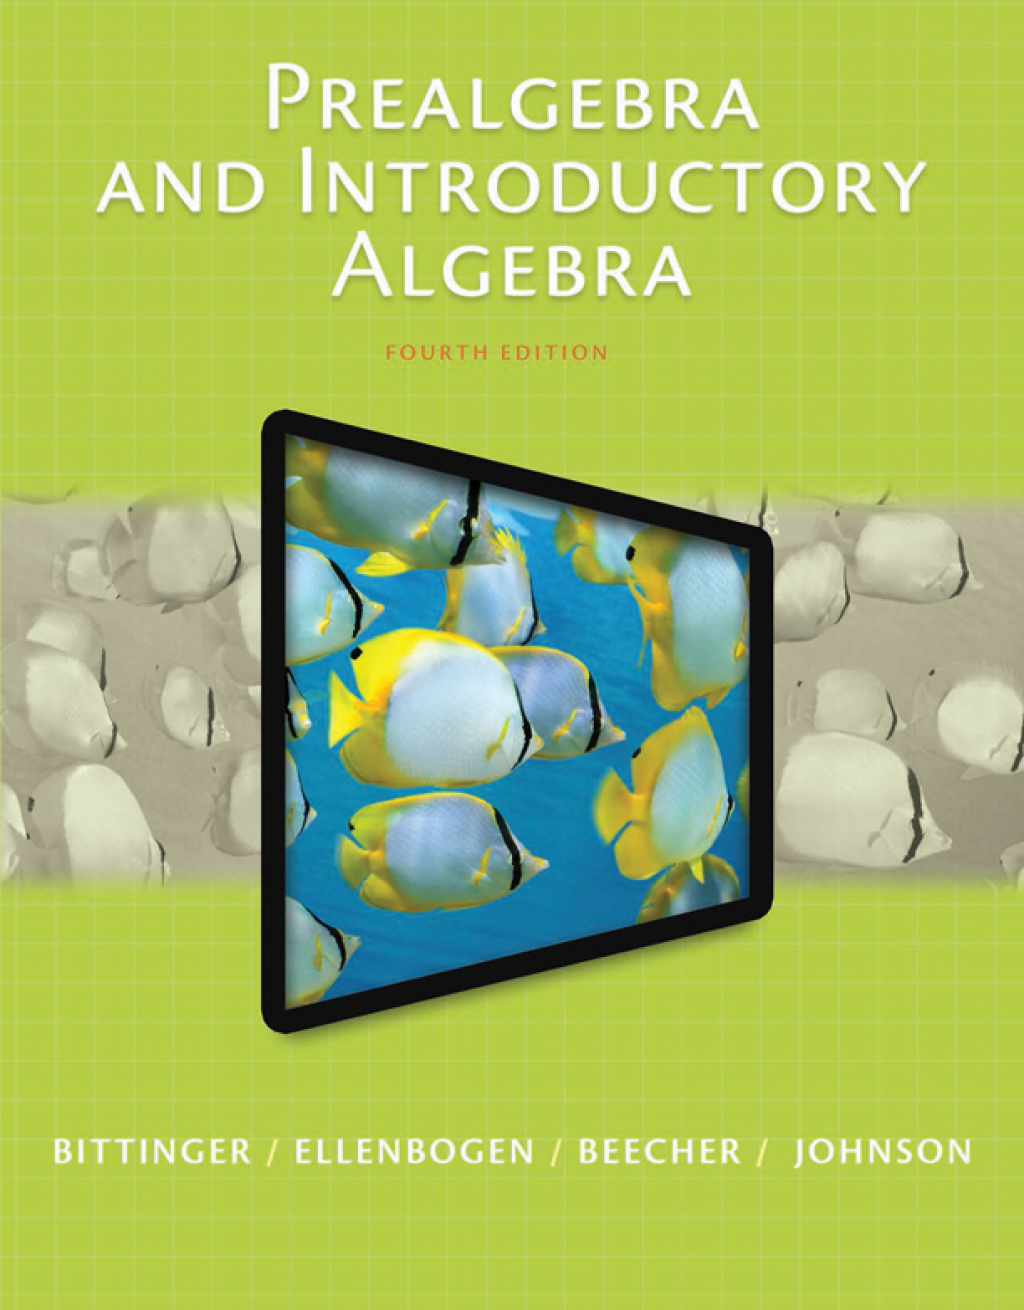 Prealgebra and Introductory Algebra - 4th Edition (eBook Rental)